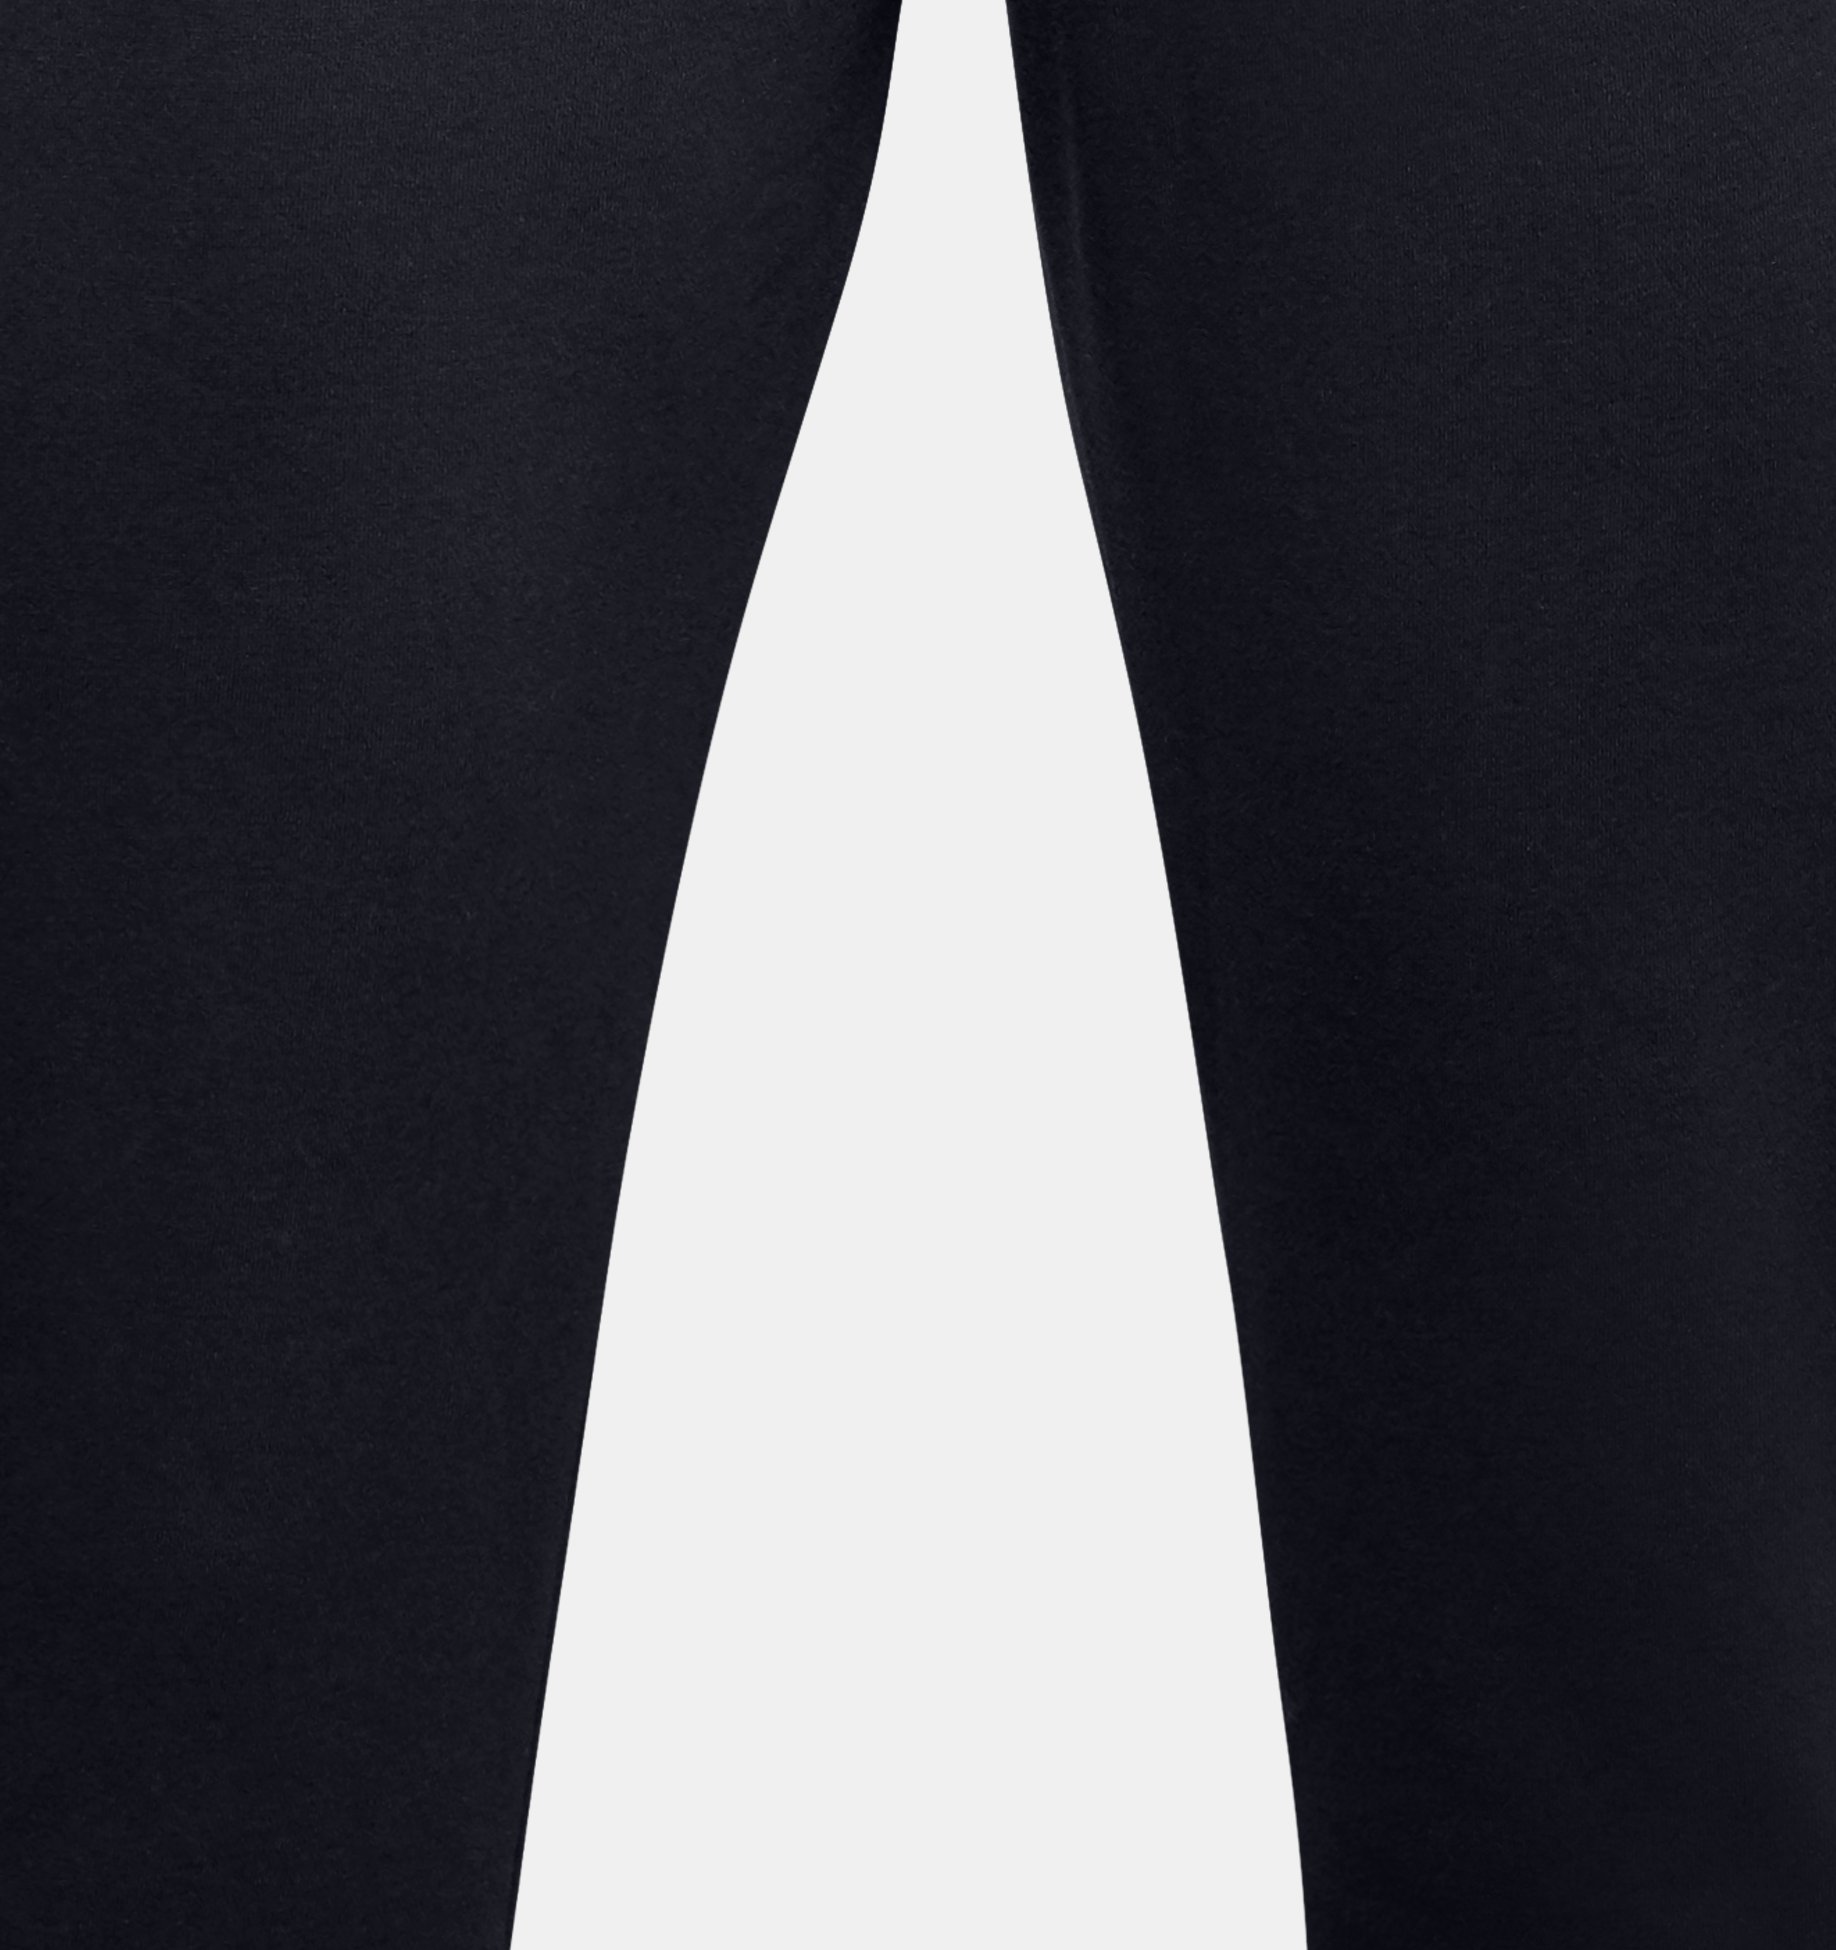  UA Essential Fleece Jogger, Black - men's sweatpants - UNDER  ARMOUR - 49.72 € - outdoorové oblečení a vybavení shop